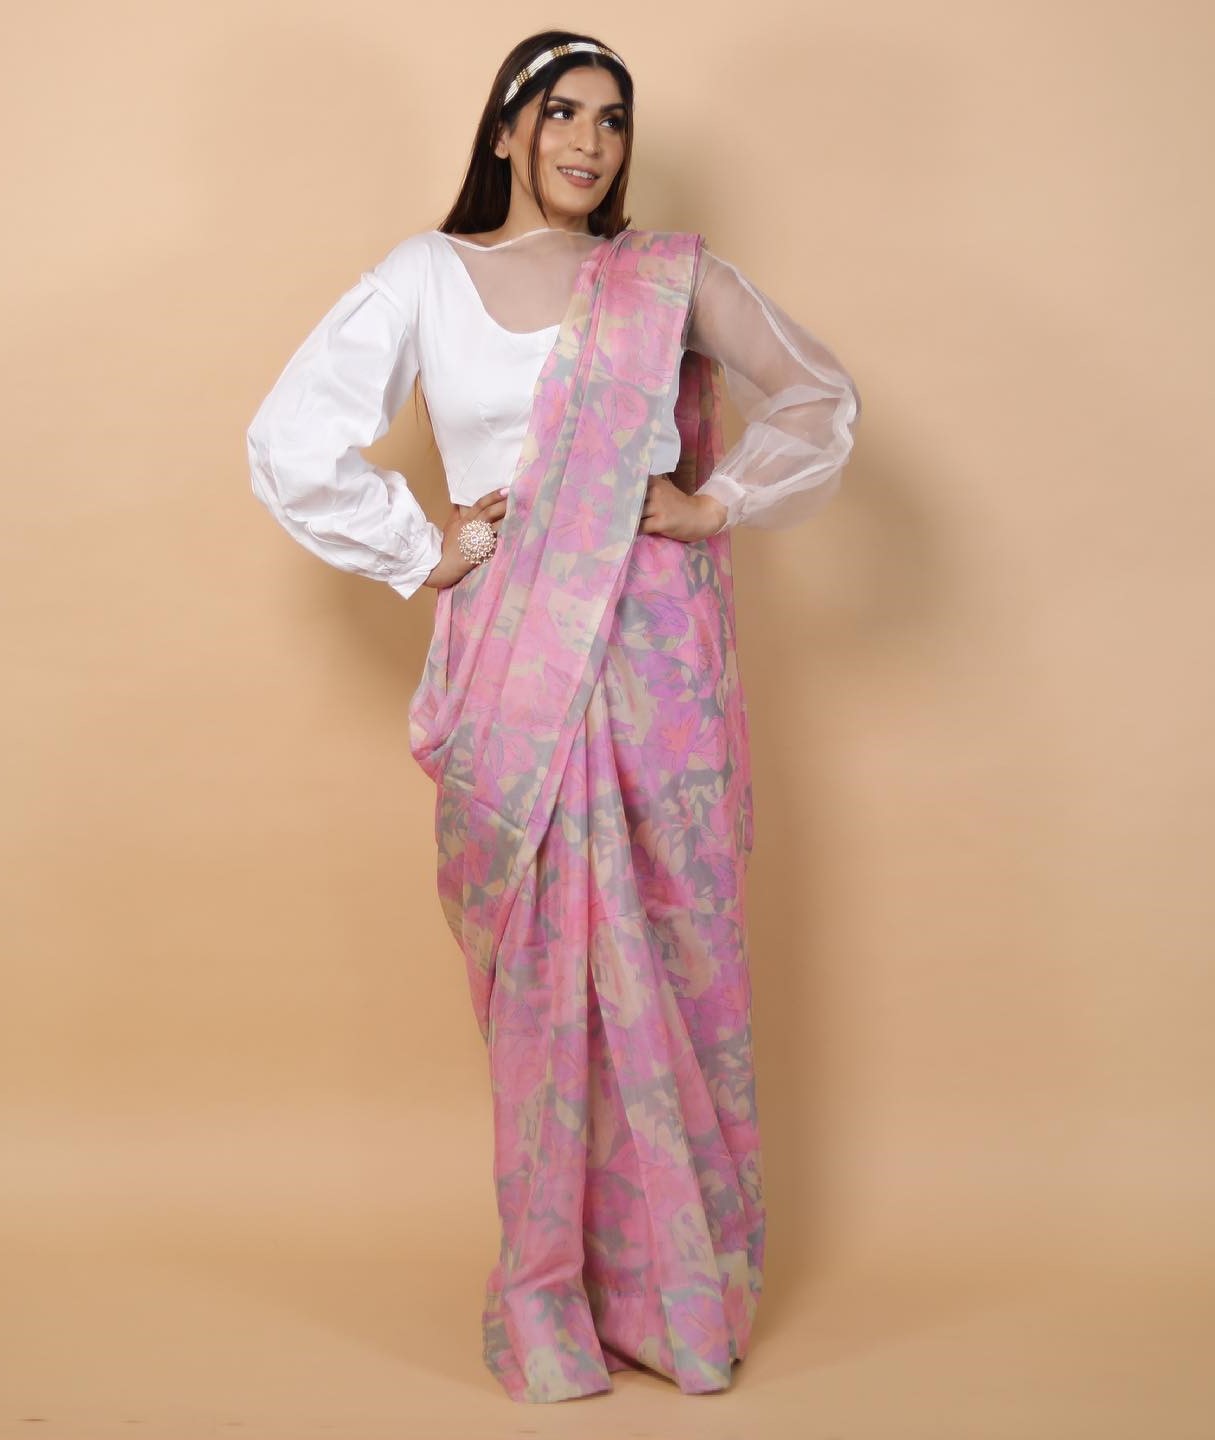 Shreya Jain In Pink Printed Chiffon Saree With White Puffed Full Sleeves Blouse Looks Beautiful